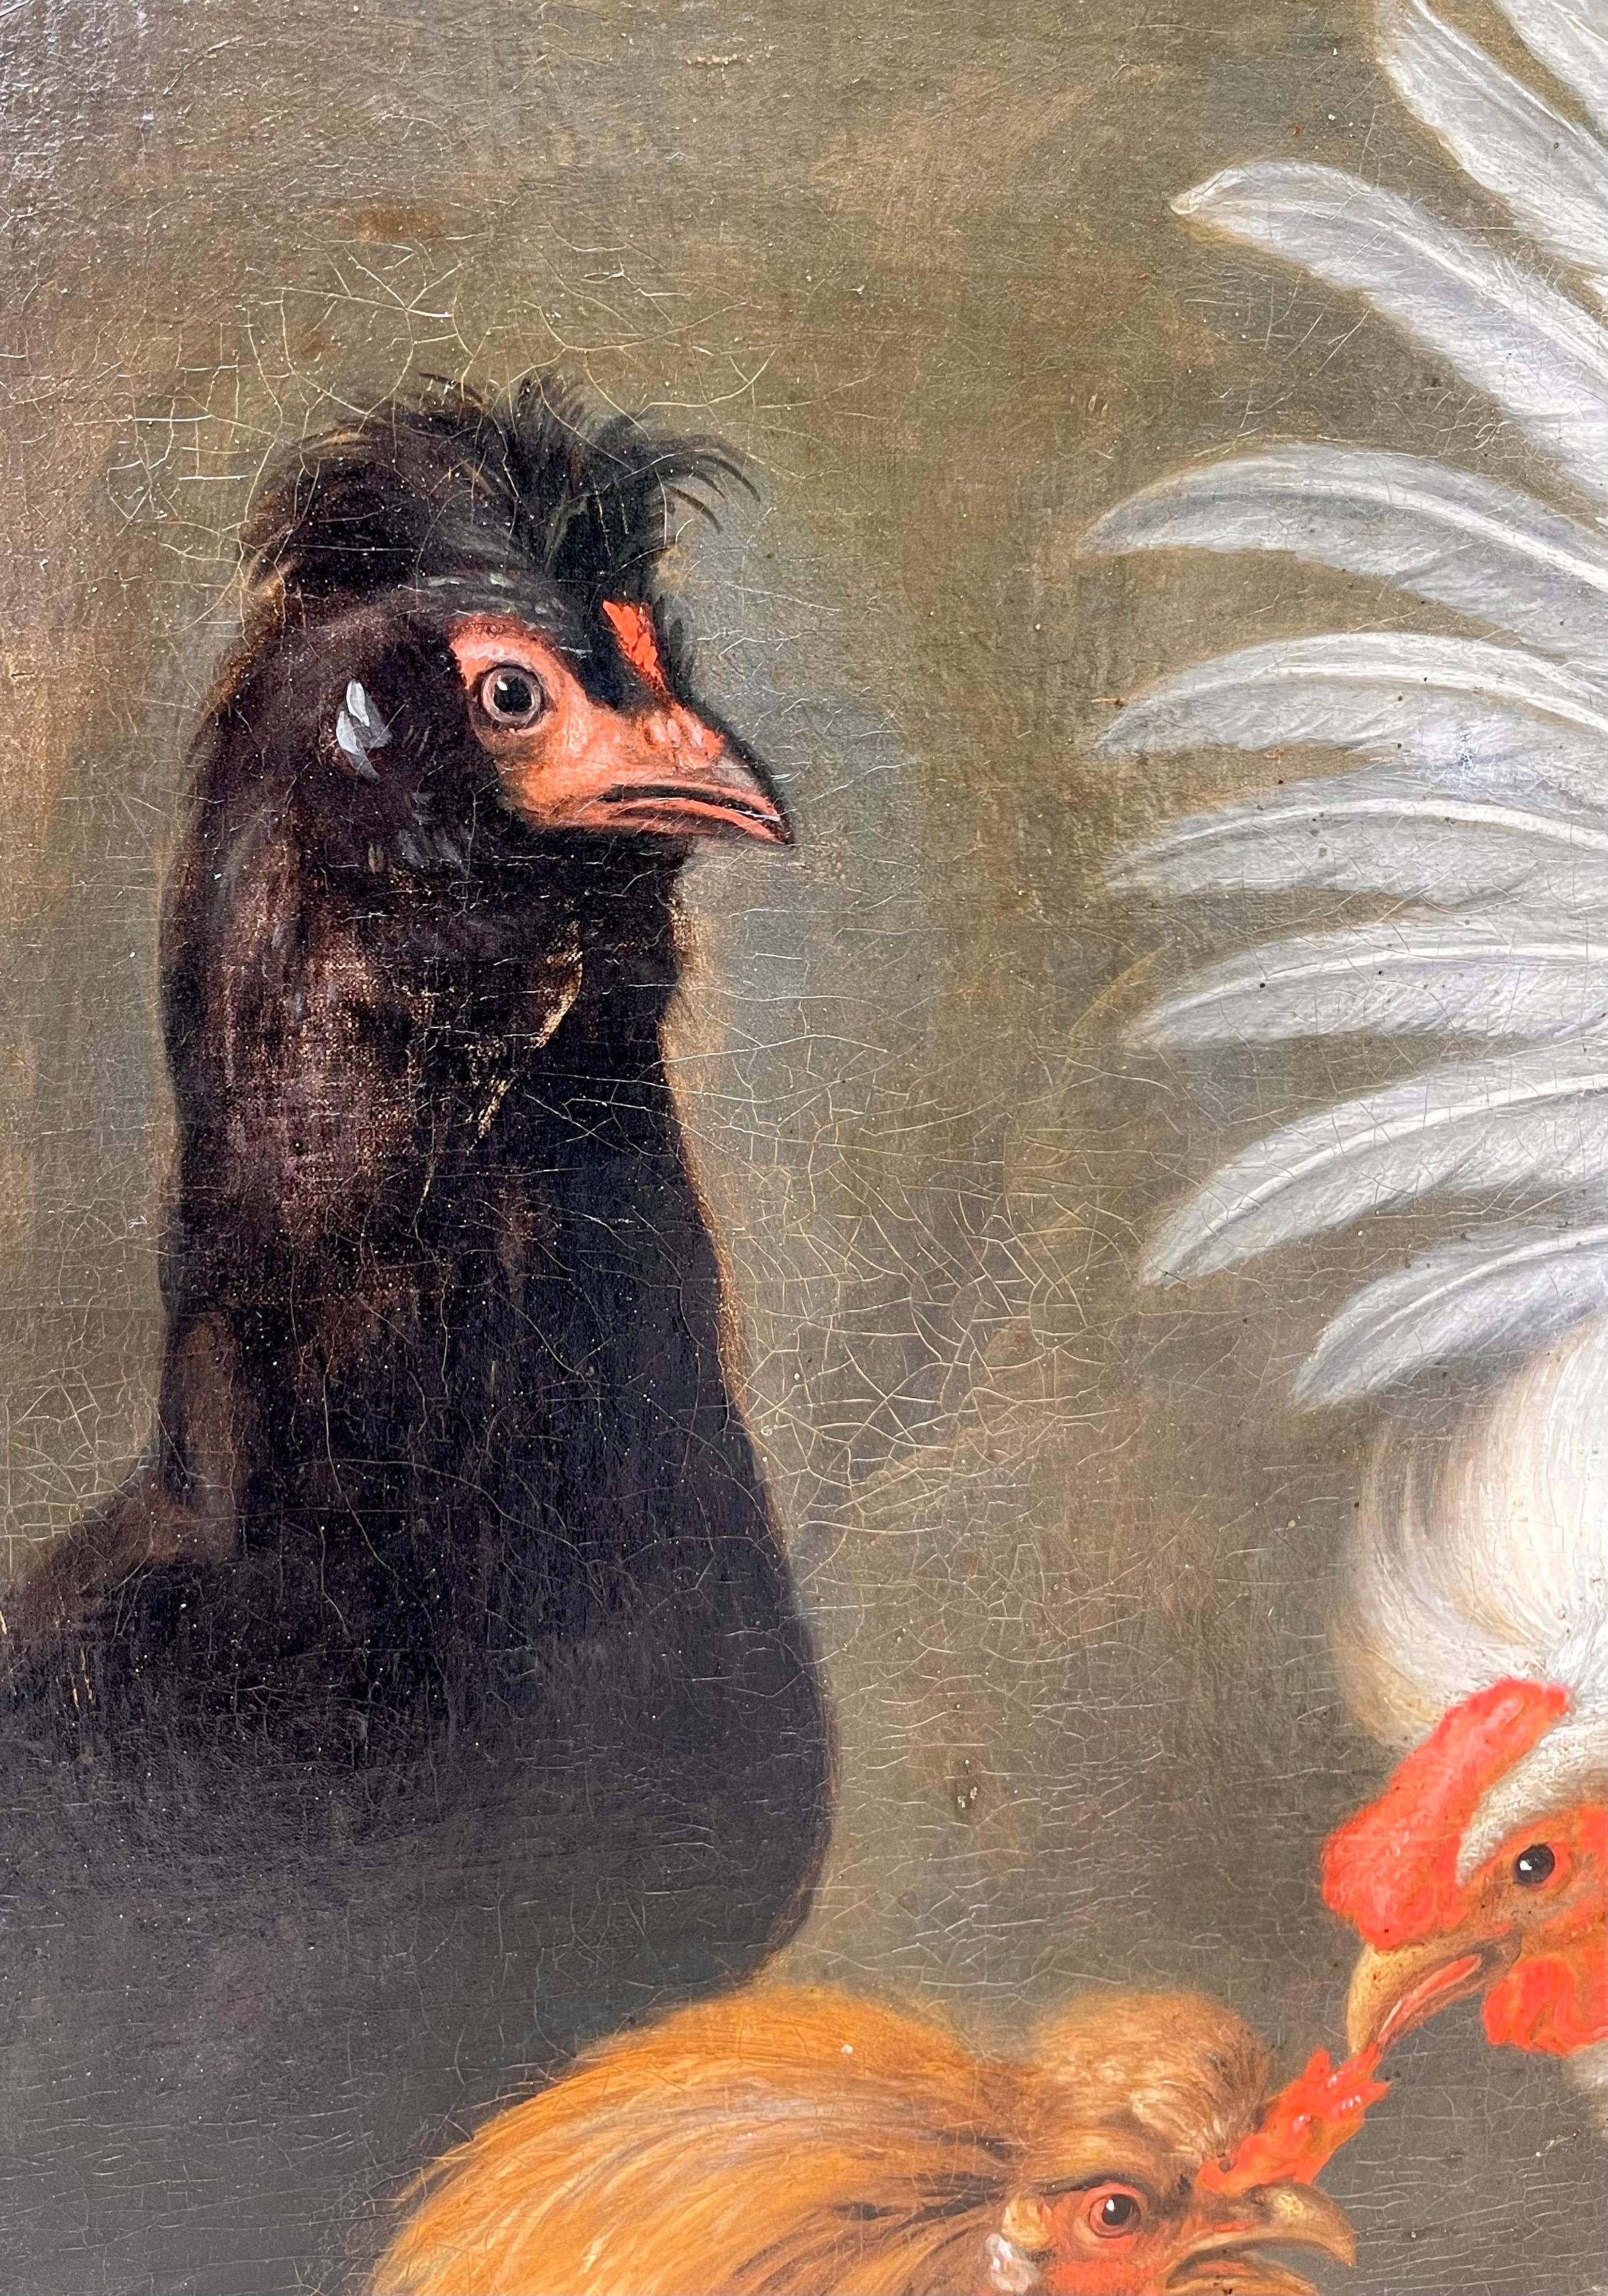 Huge 18th century Italian Old Master painting - Roosters fighting - Bird Cock - Old Masters Painting by Giorgio Duranti